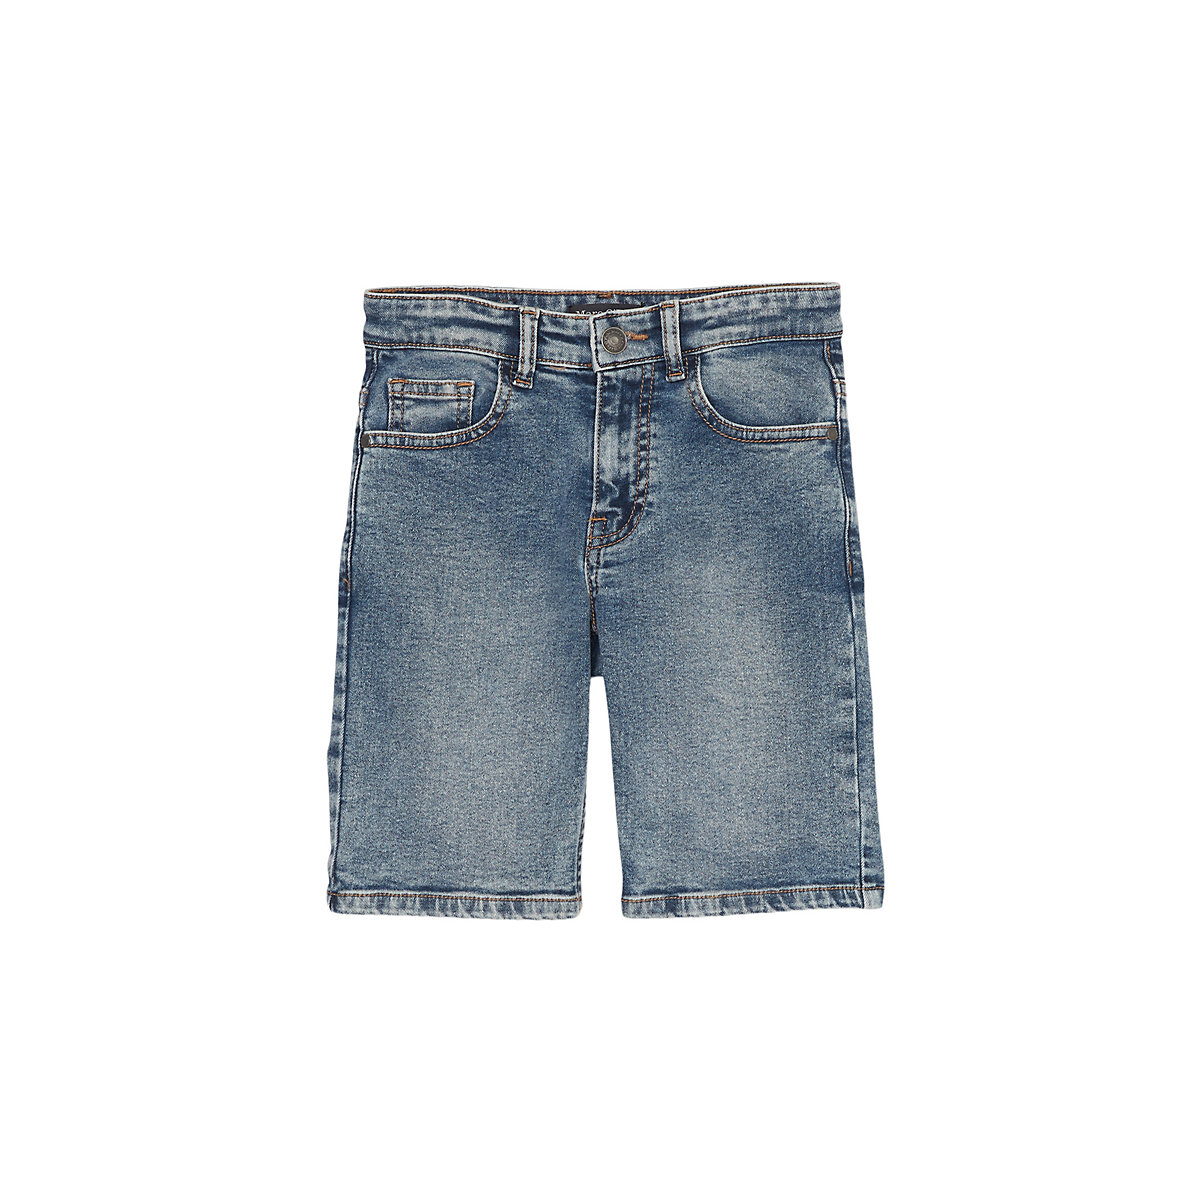 Marc O'Polo KIDS-BOYS Jeansbermuda im Five-Pocket-Stil Jeanshosen blau